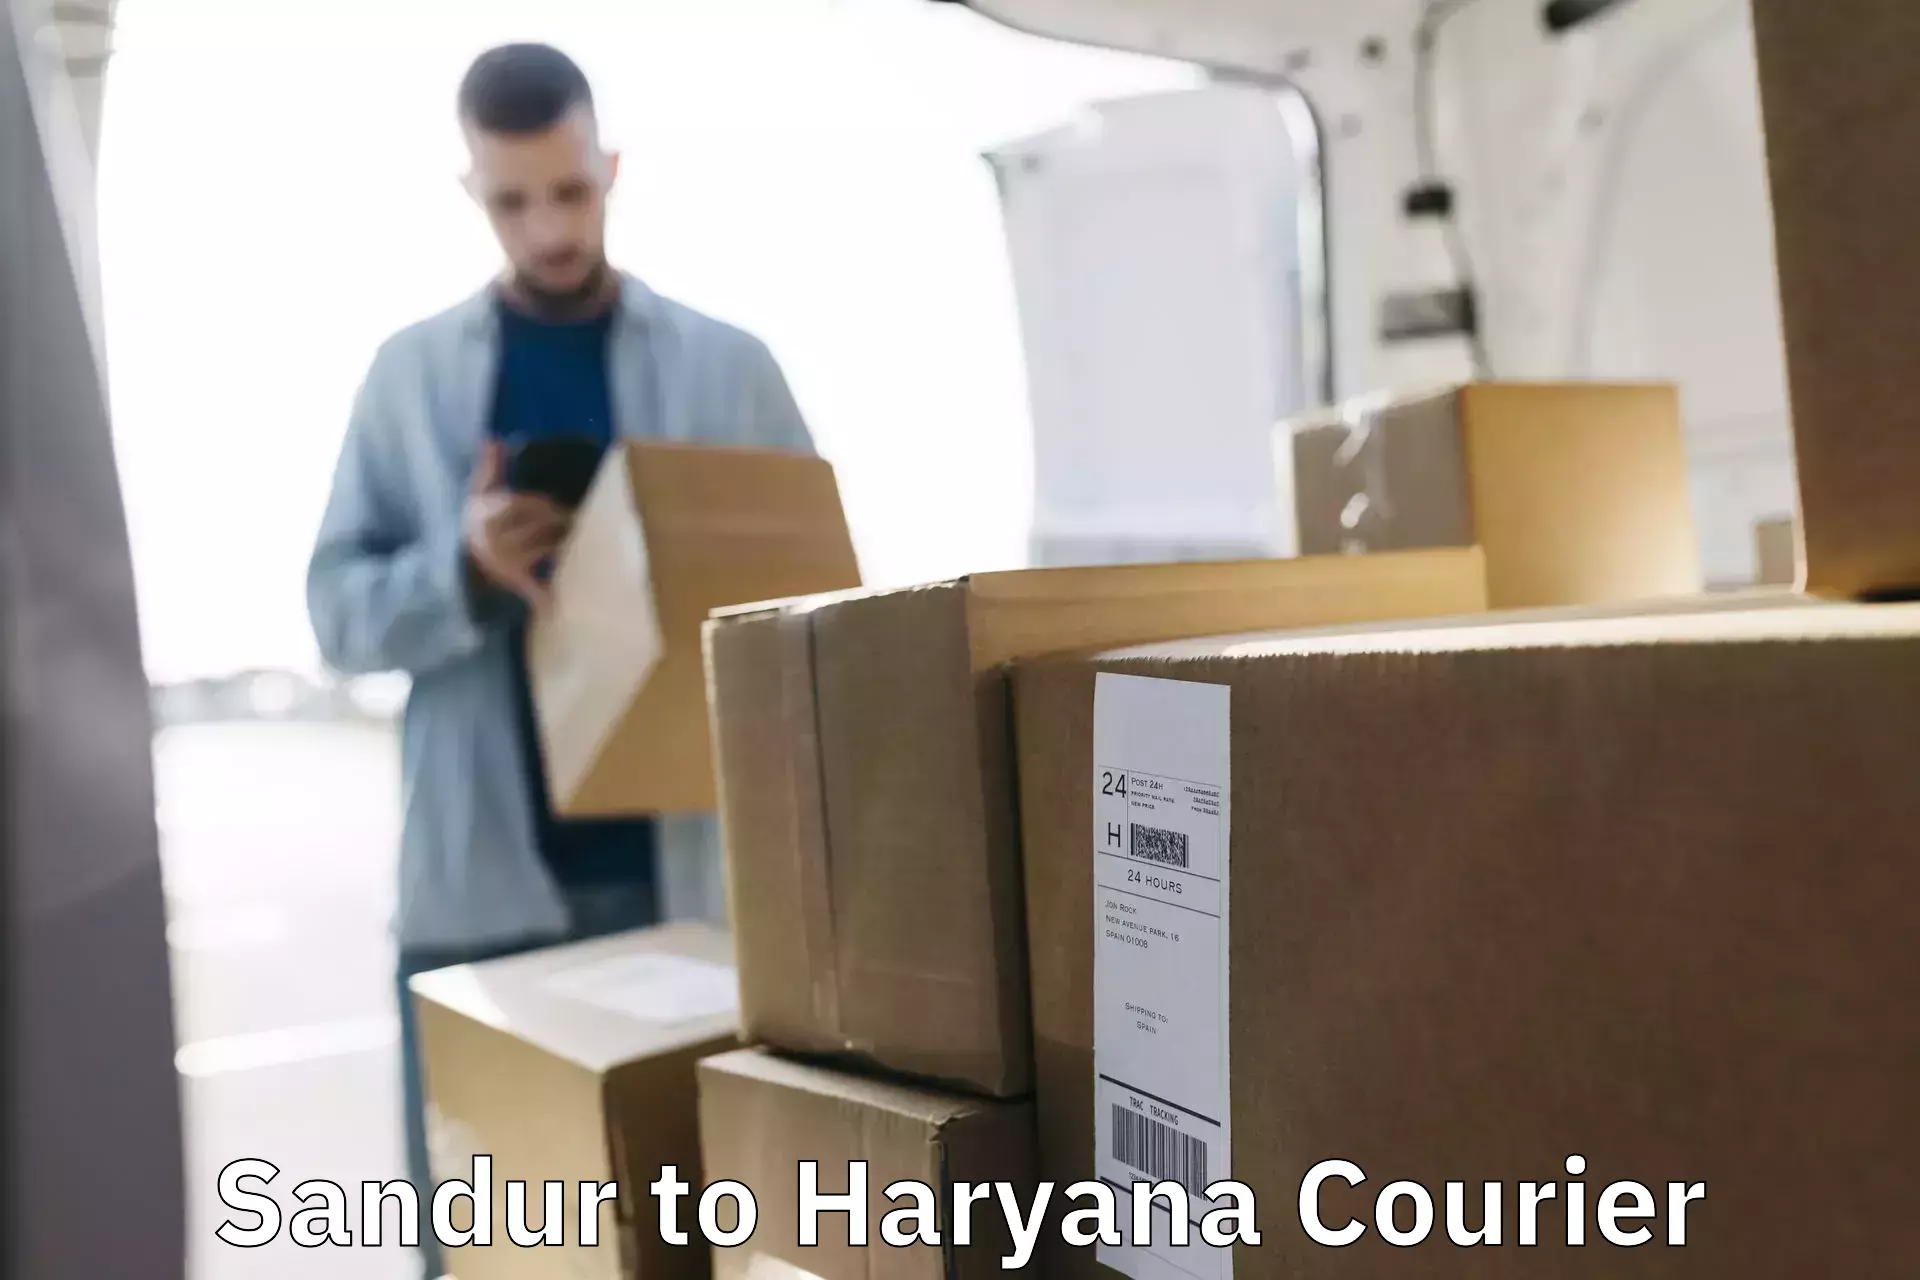 International courier networks Sandur to Panchkula